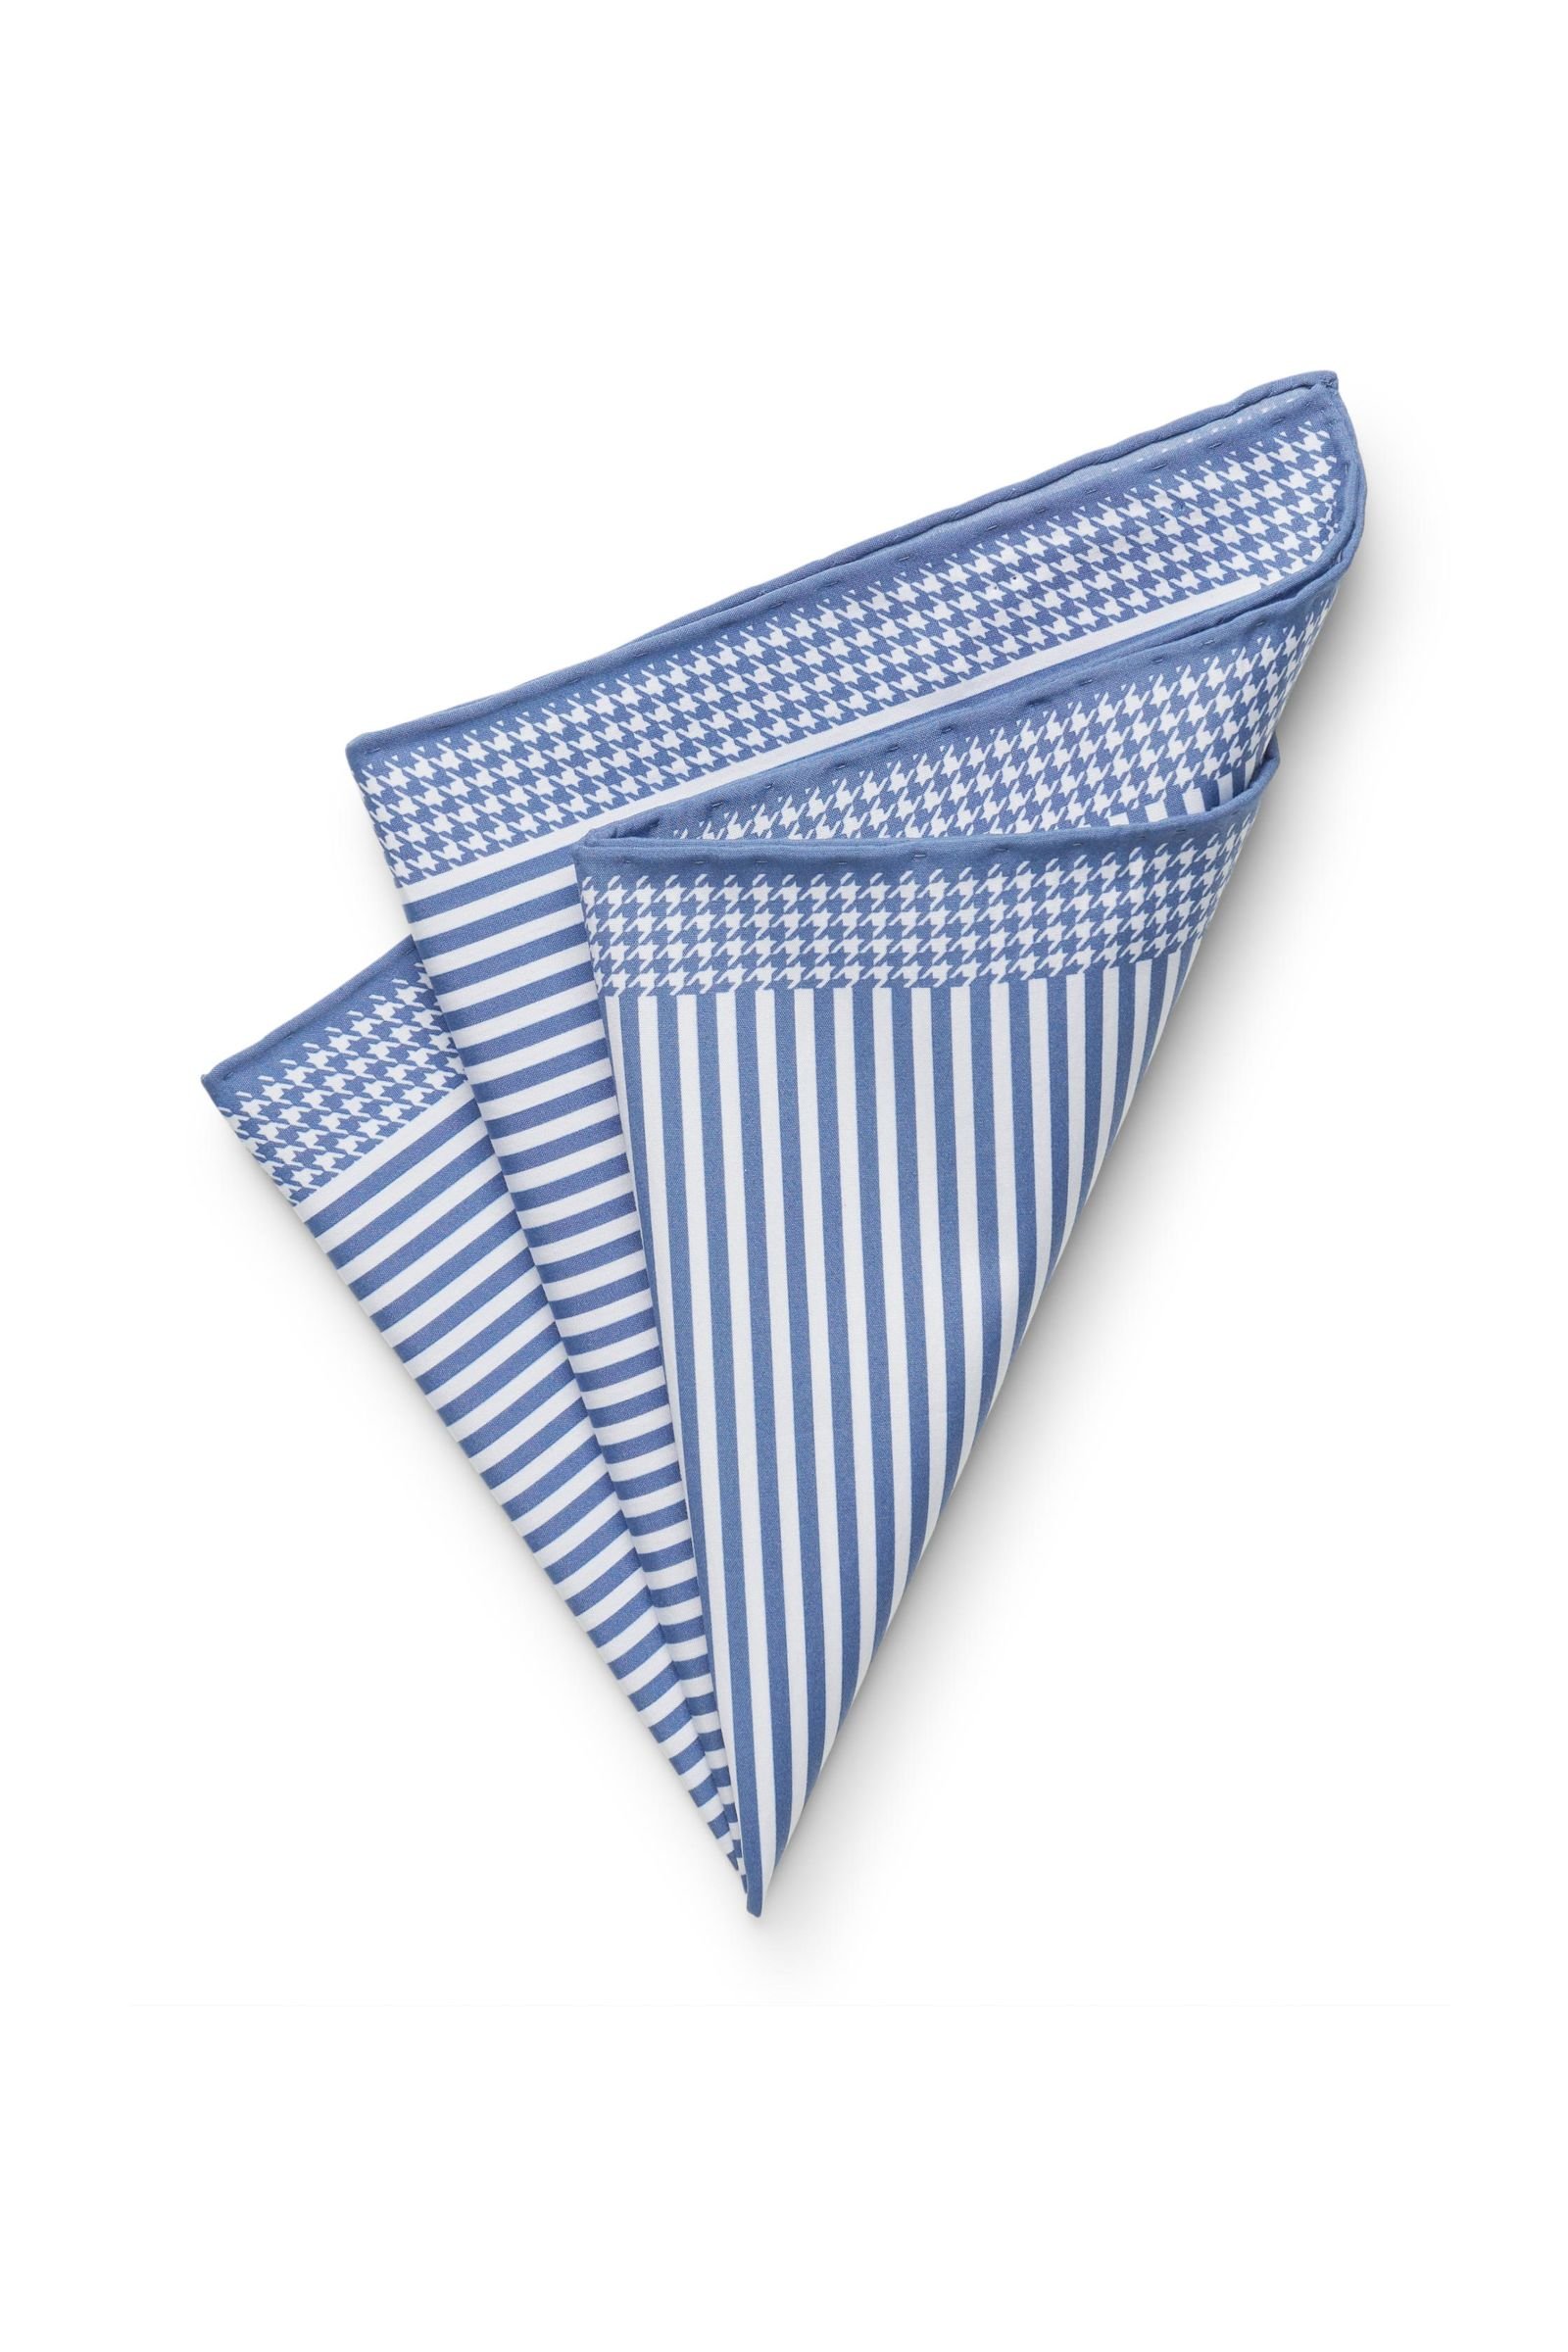 Pocket square blue/white striped